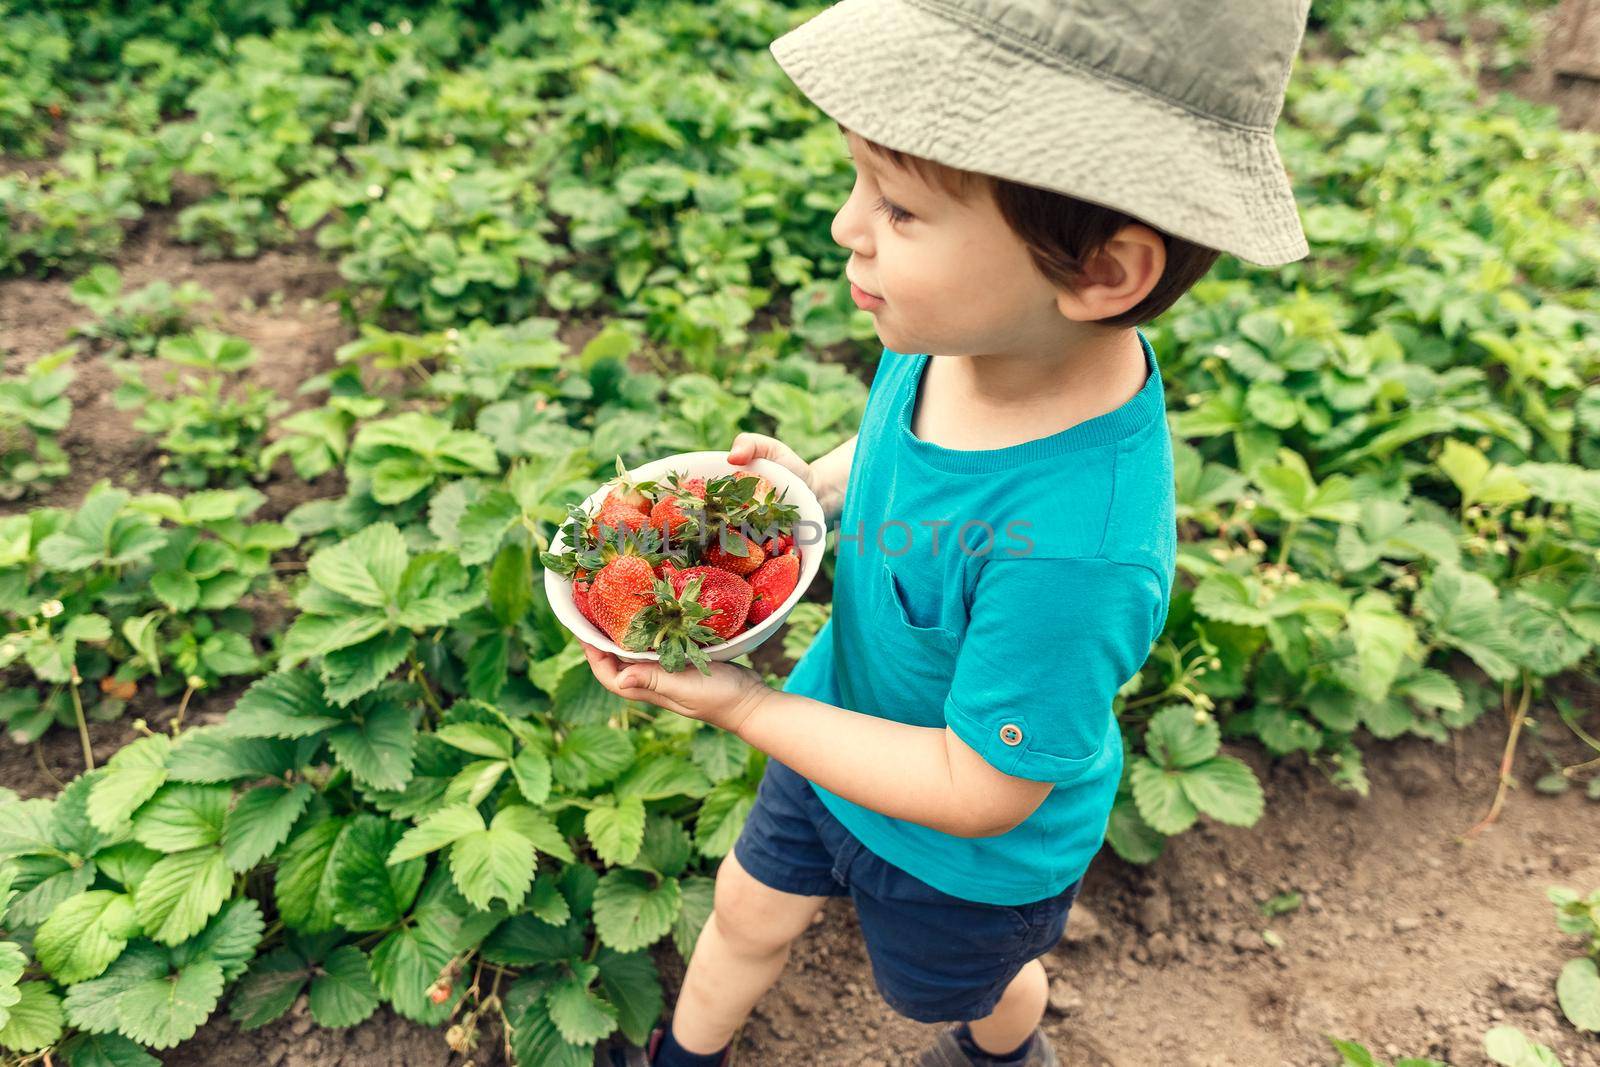 Litlle boy picking fresh strawberries in the garden. Local farming, organic food cultivation